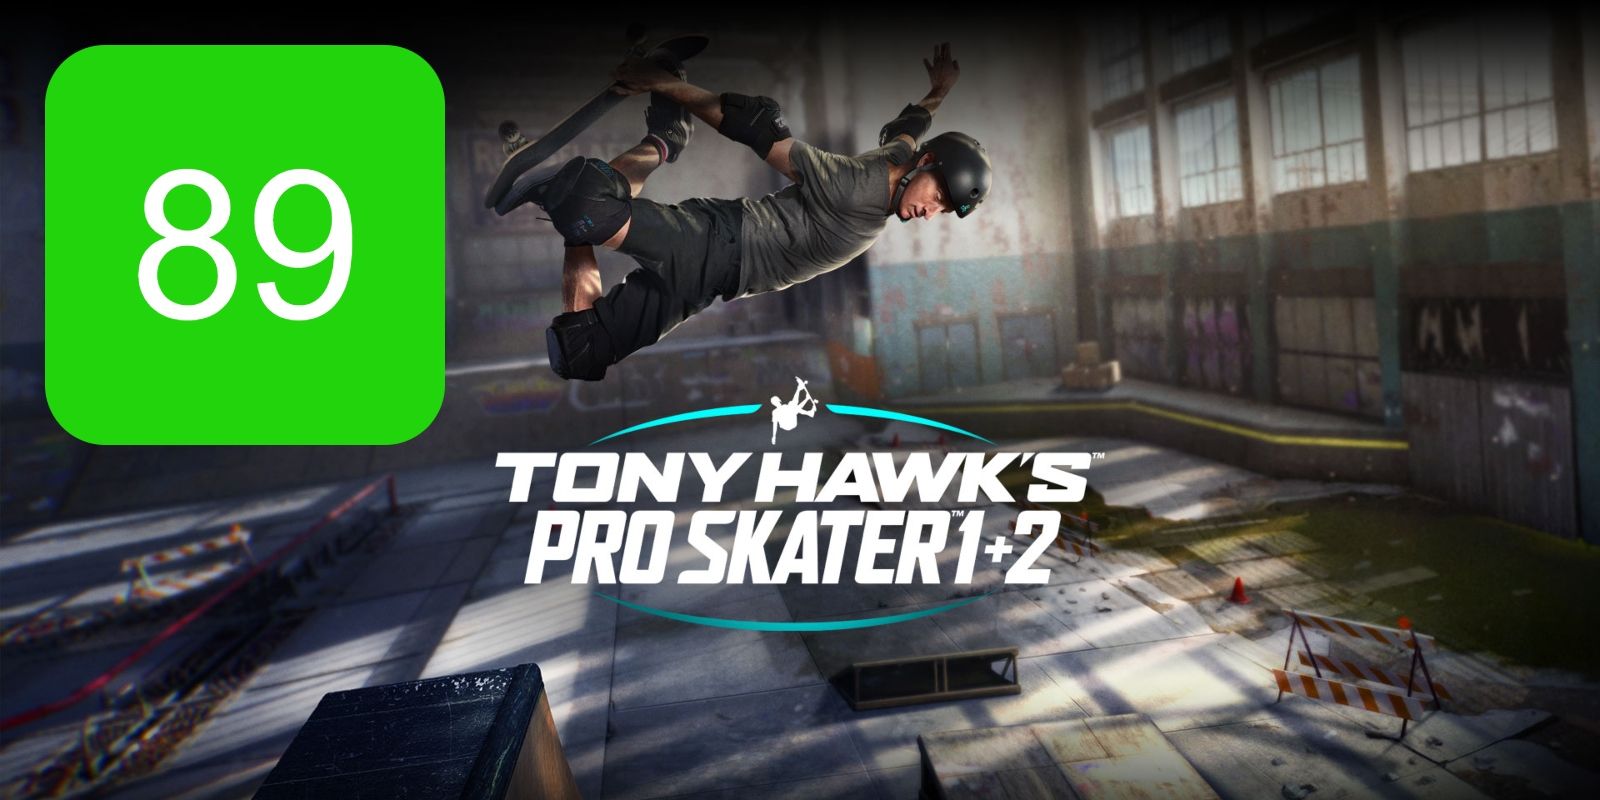 The PS4 metascore for tony hawk's proskater 1 + 2 remake